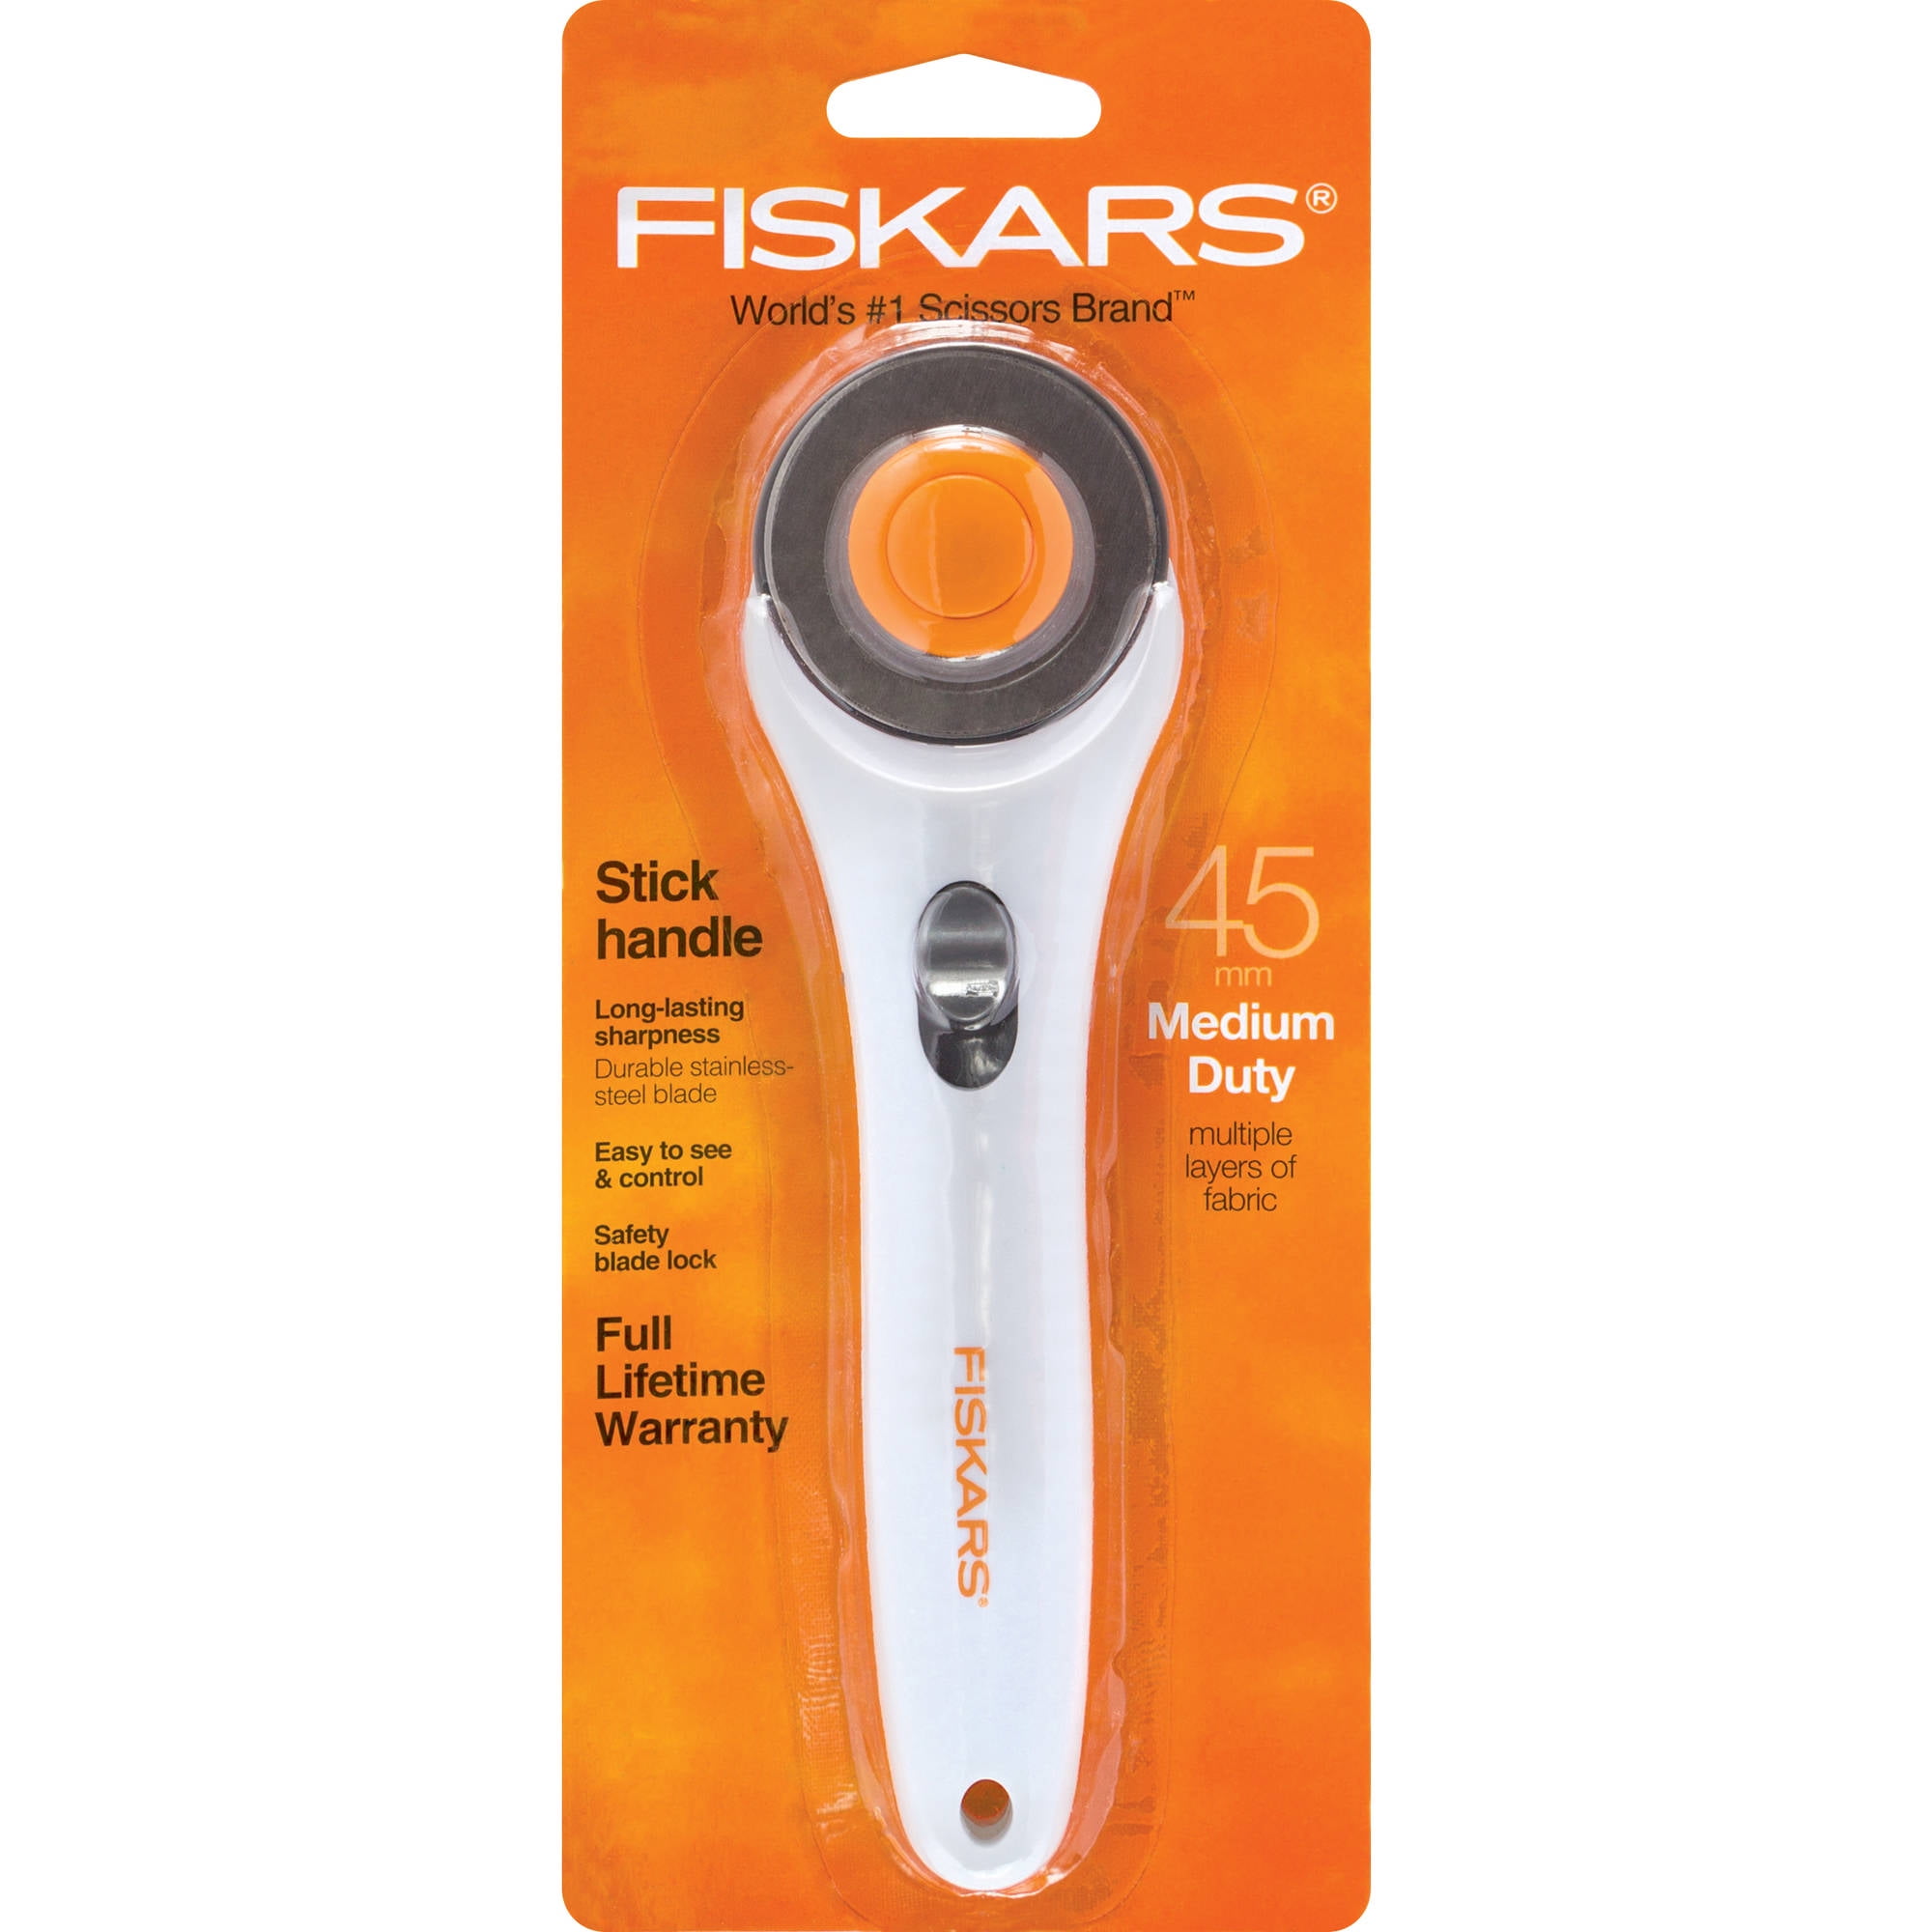 Fiskars 45mm Rotary Cutter Stick White/Orange Plus Perforating& 2pk Rotary Blade